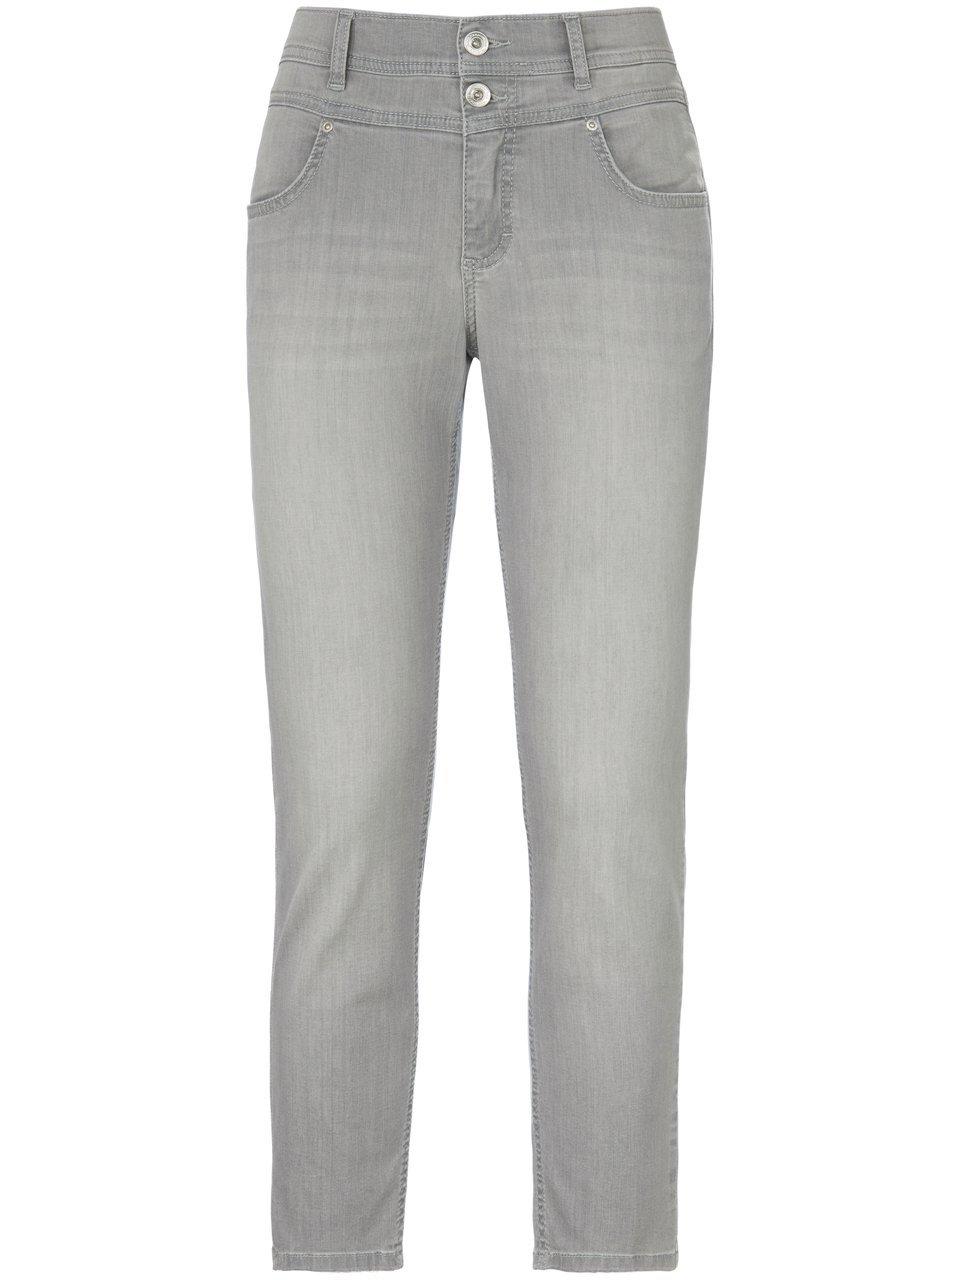 Enkellange skinny jeans model Ornella Button Van ANGELS denim